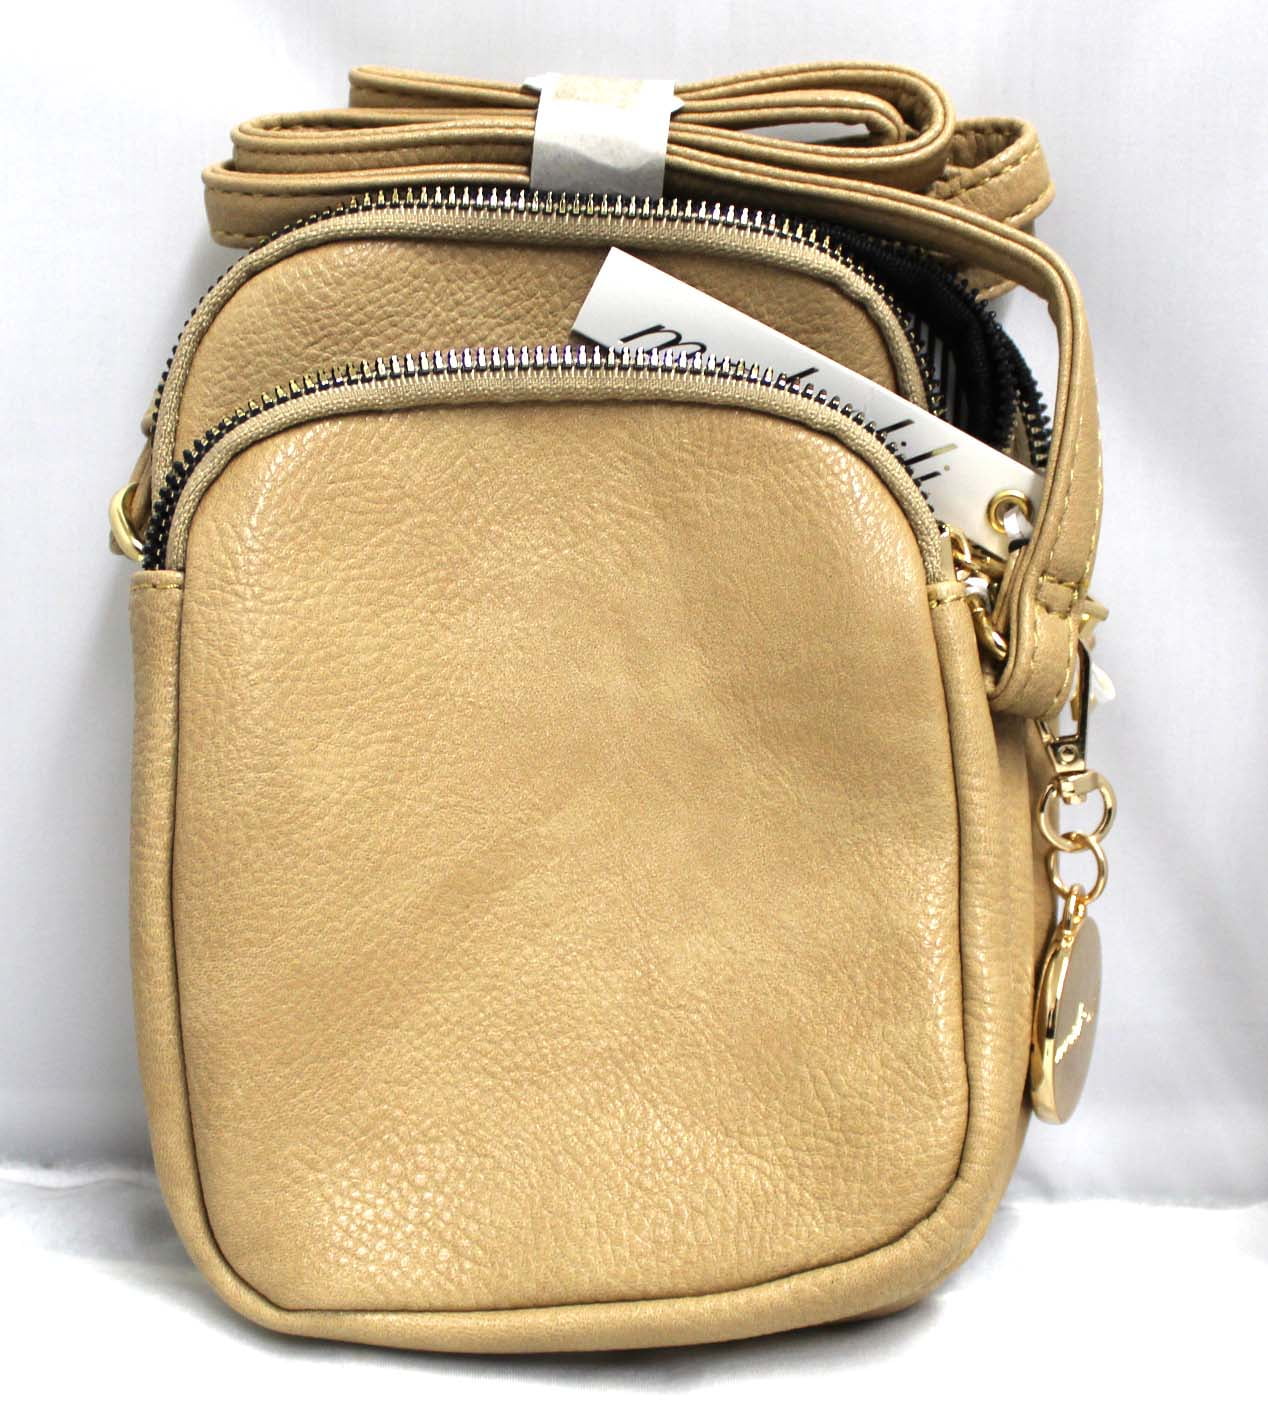 ZOOEASS Triple Zip Small Crossbody Bag Lightweight Purses Vegan Leather  Wristlet Clutch, Includes Adjustable Shoulder